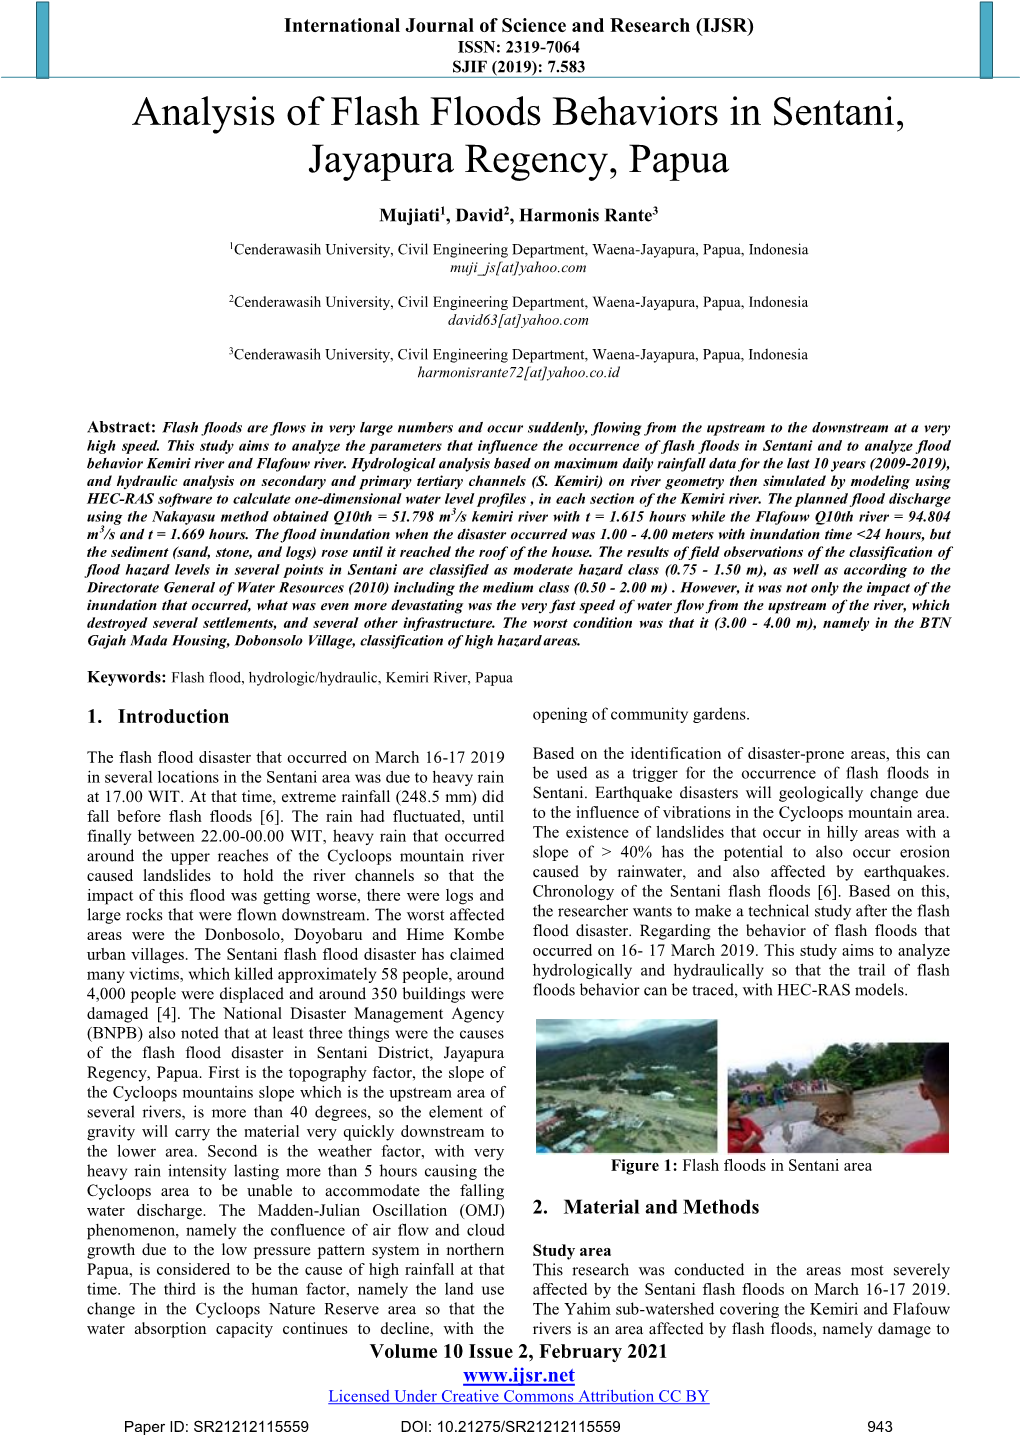 Analysis of Flash Floods Behaviors in Sentani, Jayapura Regency, Papua